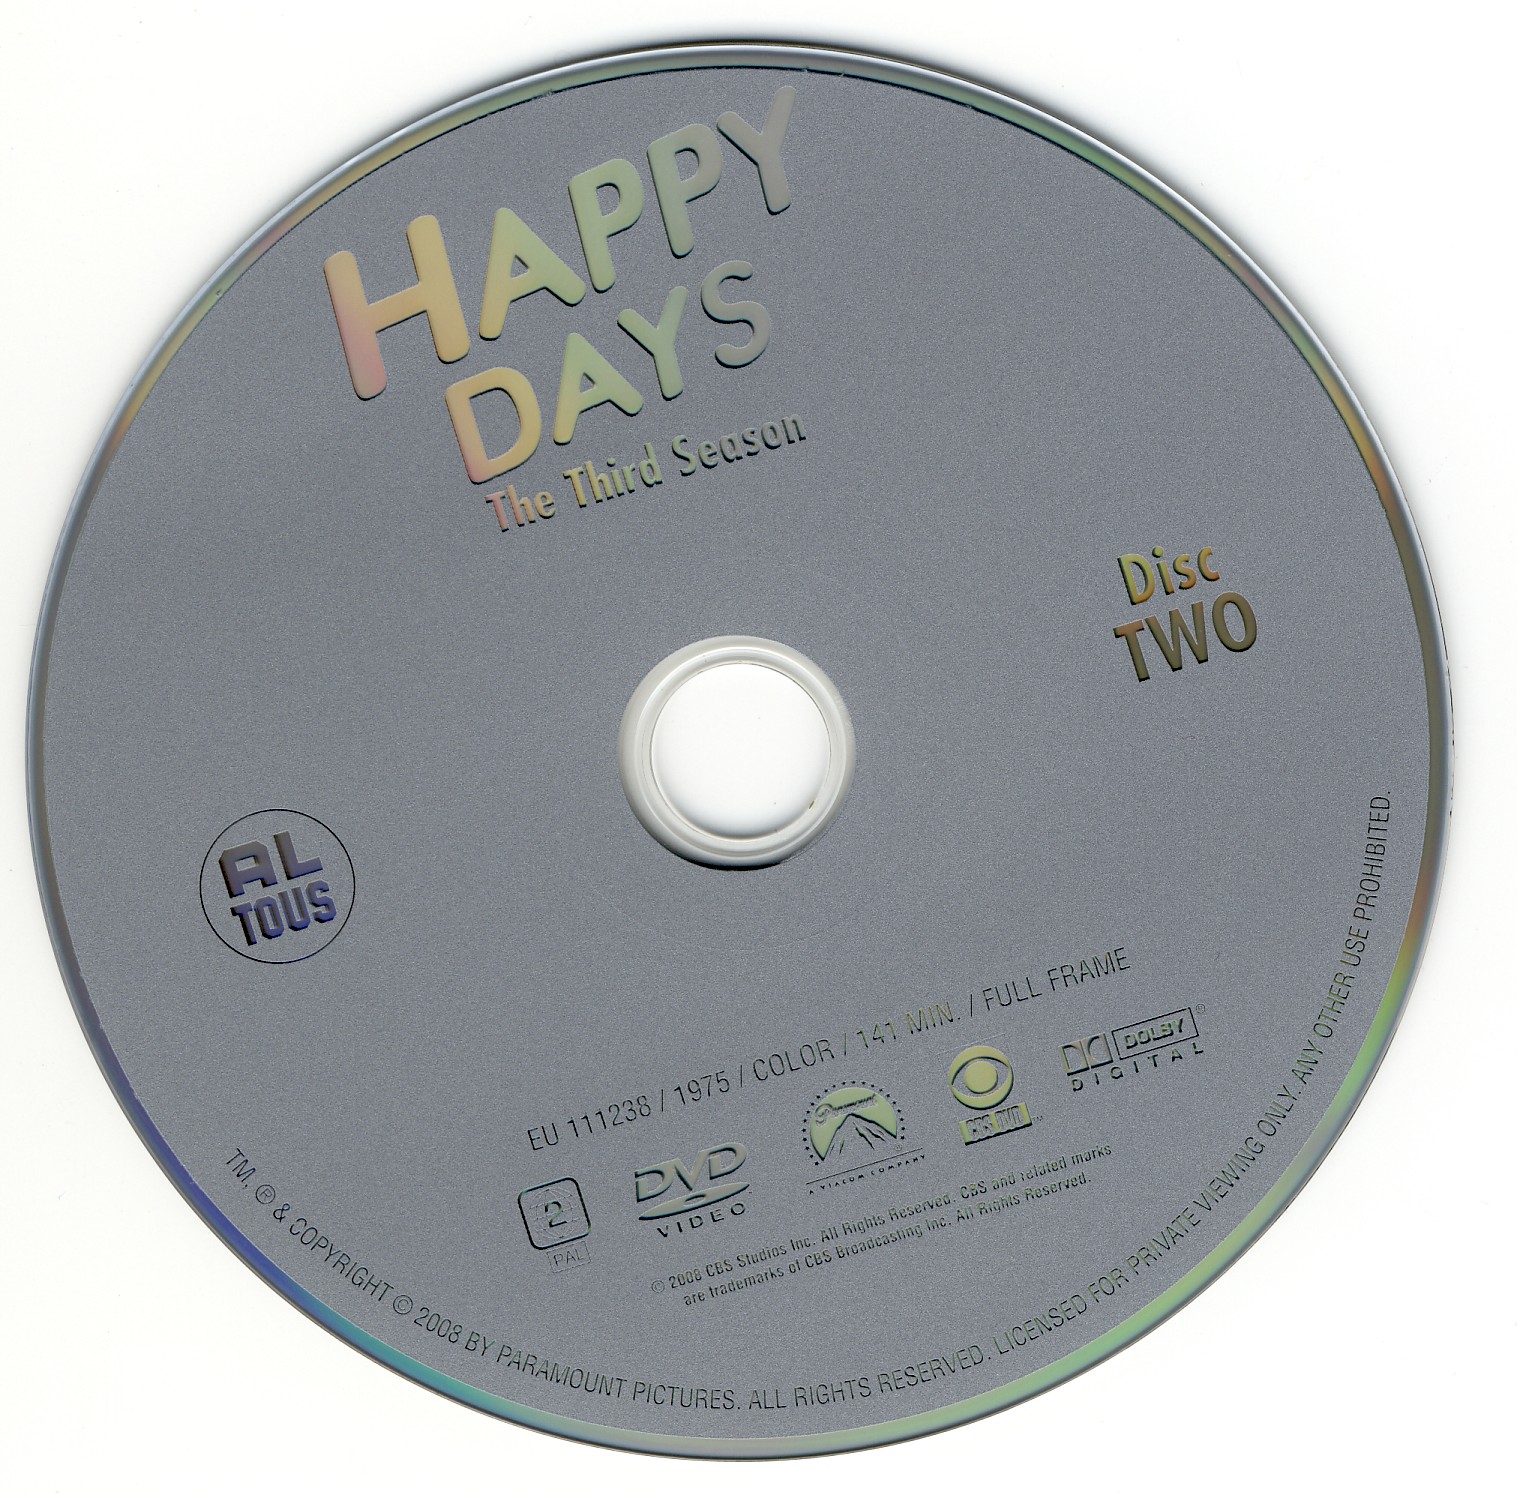 Happy days Saison 03 DISC 2